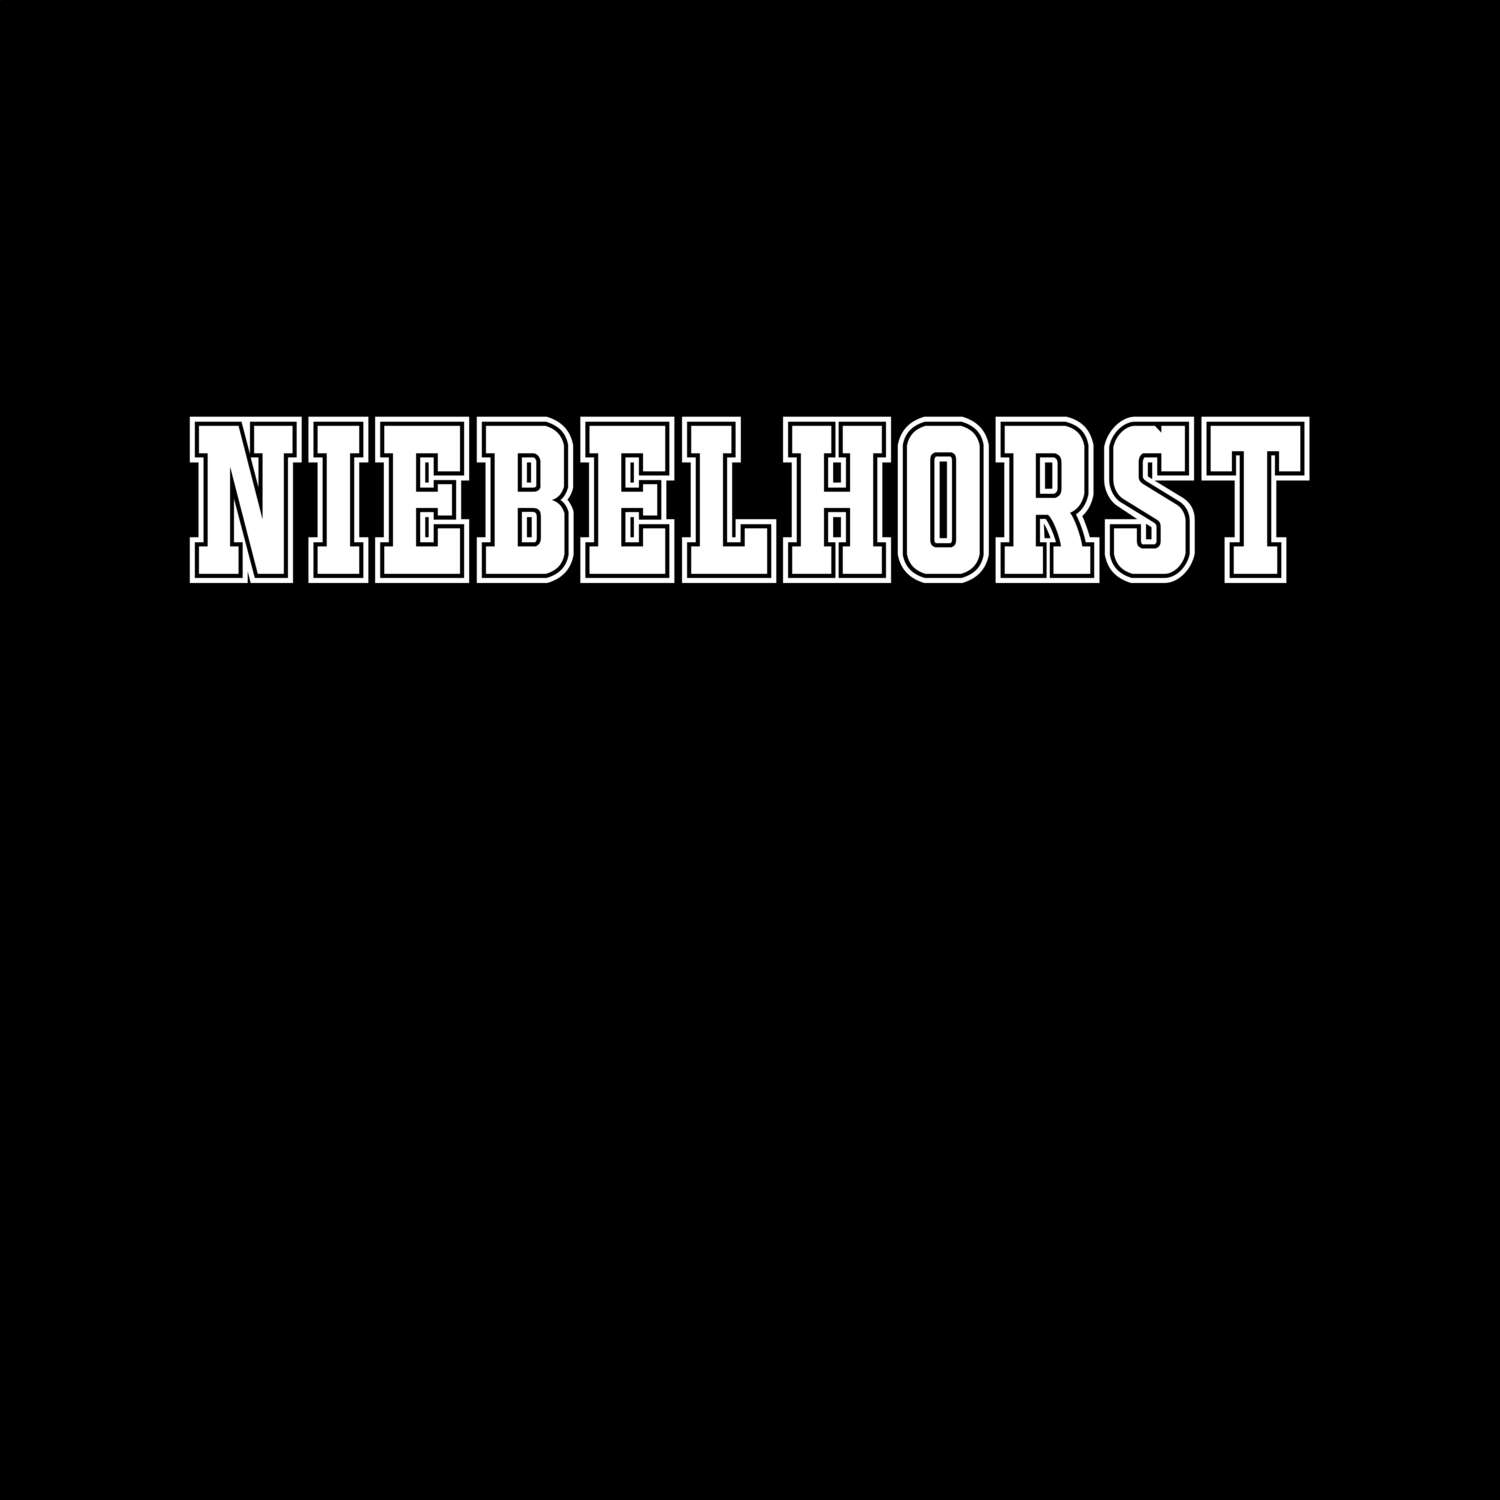 Niebelhorst T-Shirt »Classic«